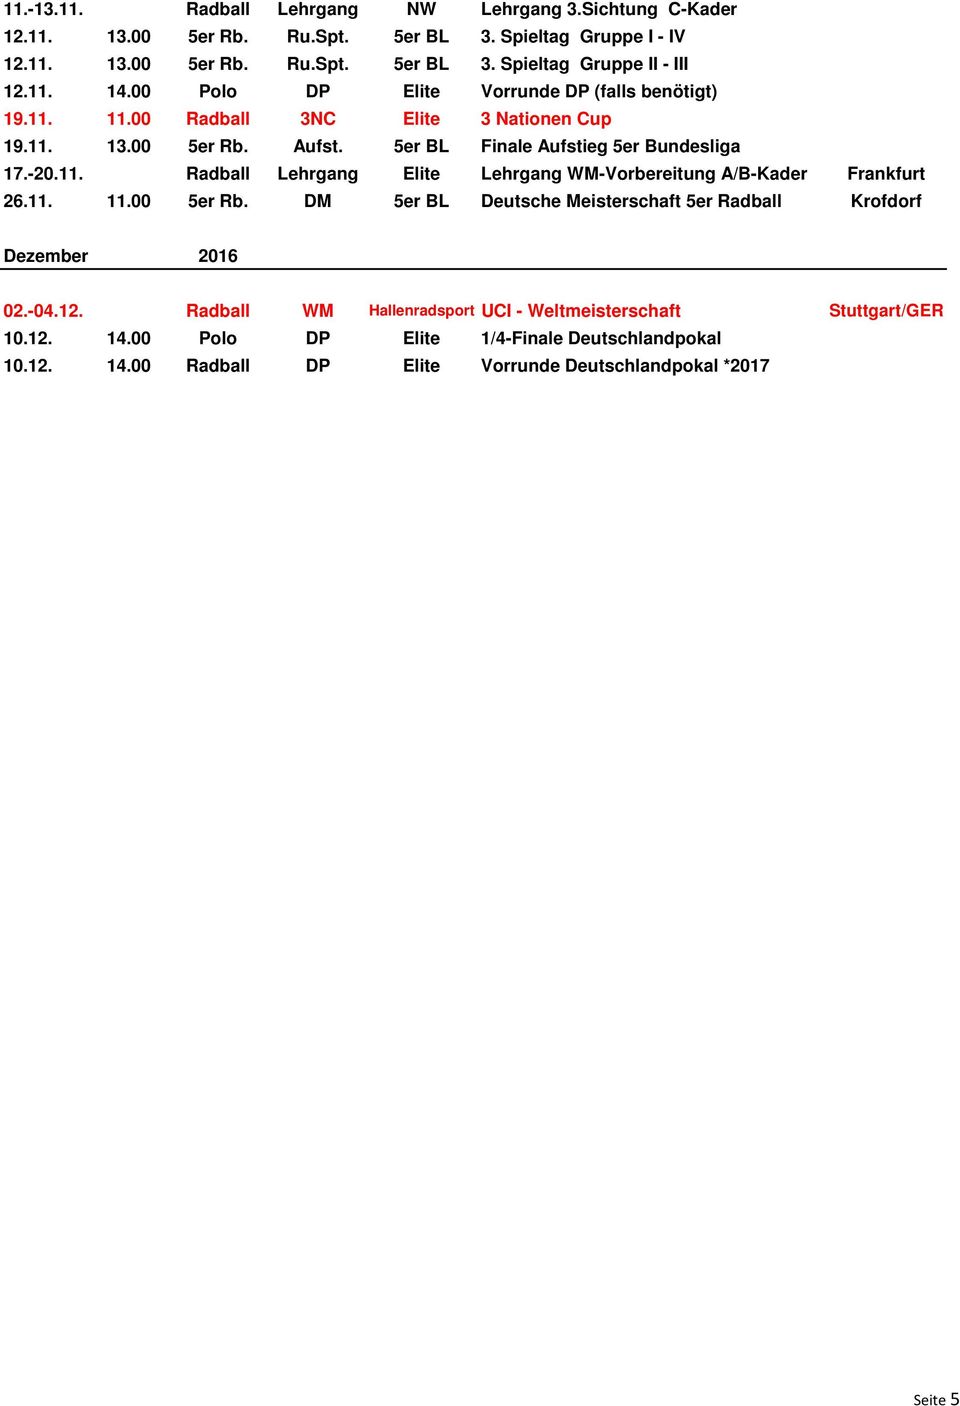 11. 11.00 5er Rb. DM 5er BL Deutsche Meisterschaft 5er Radball Krofdorf Dezember 2016 02.-04.12. Radball WM Hallenradsport UCI - Weltmeisterschaft Stuttgart/GER 10.12. 14.